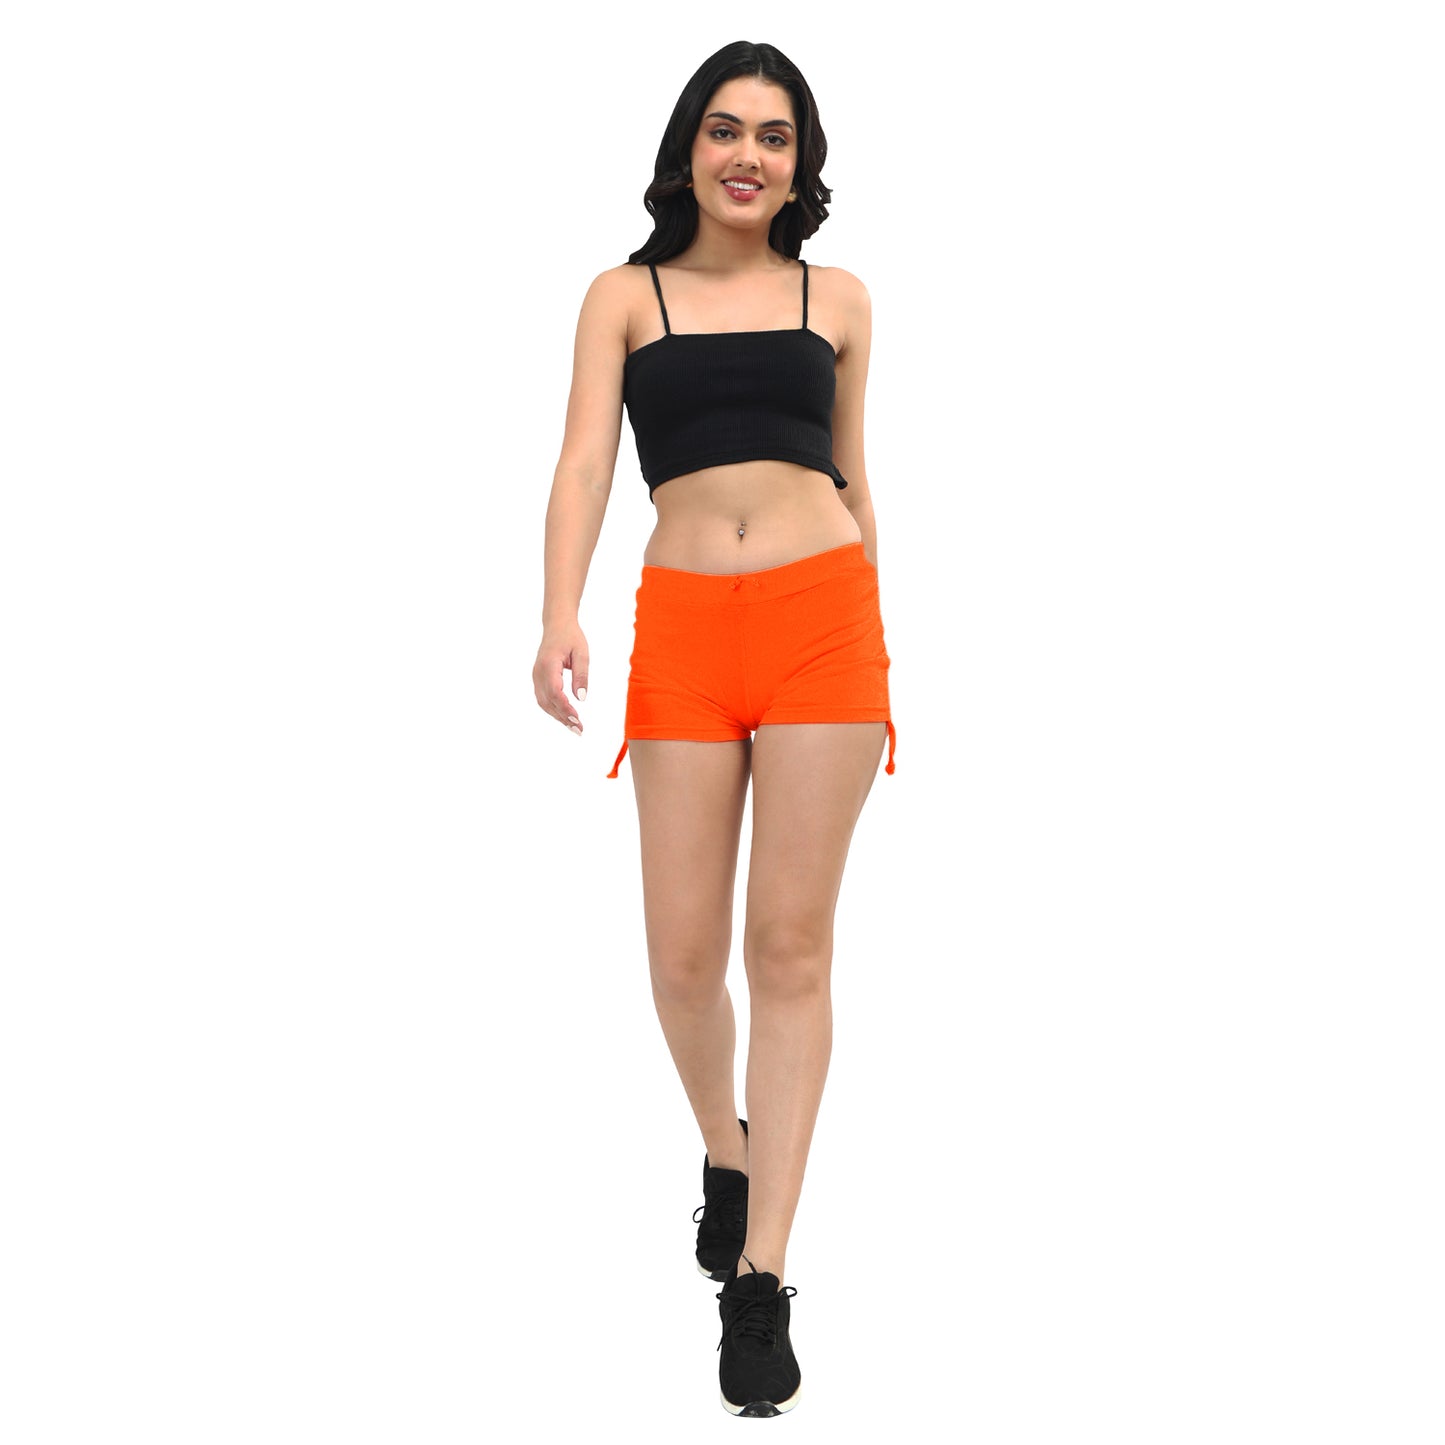 TWGE Women Cotton Hot Shorts - Short Pants for Ladies - Ideal for Gym Yoga & Nightwear - Color Orange